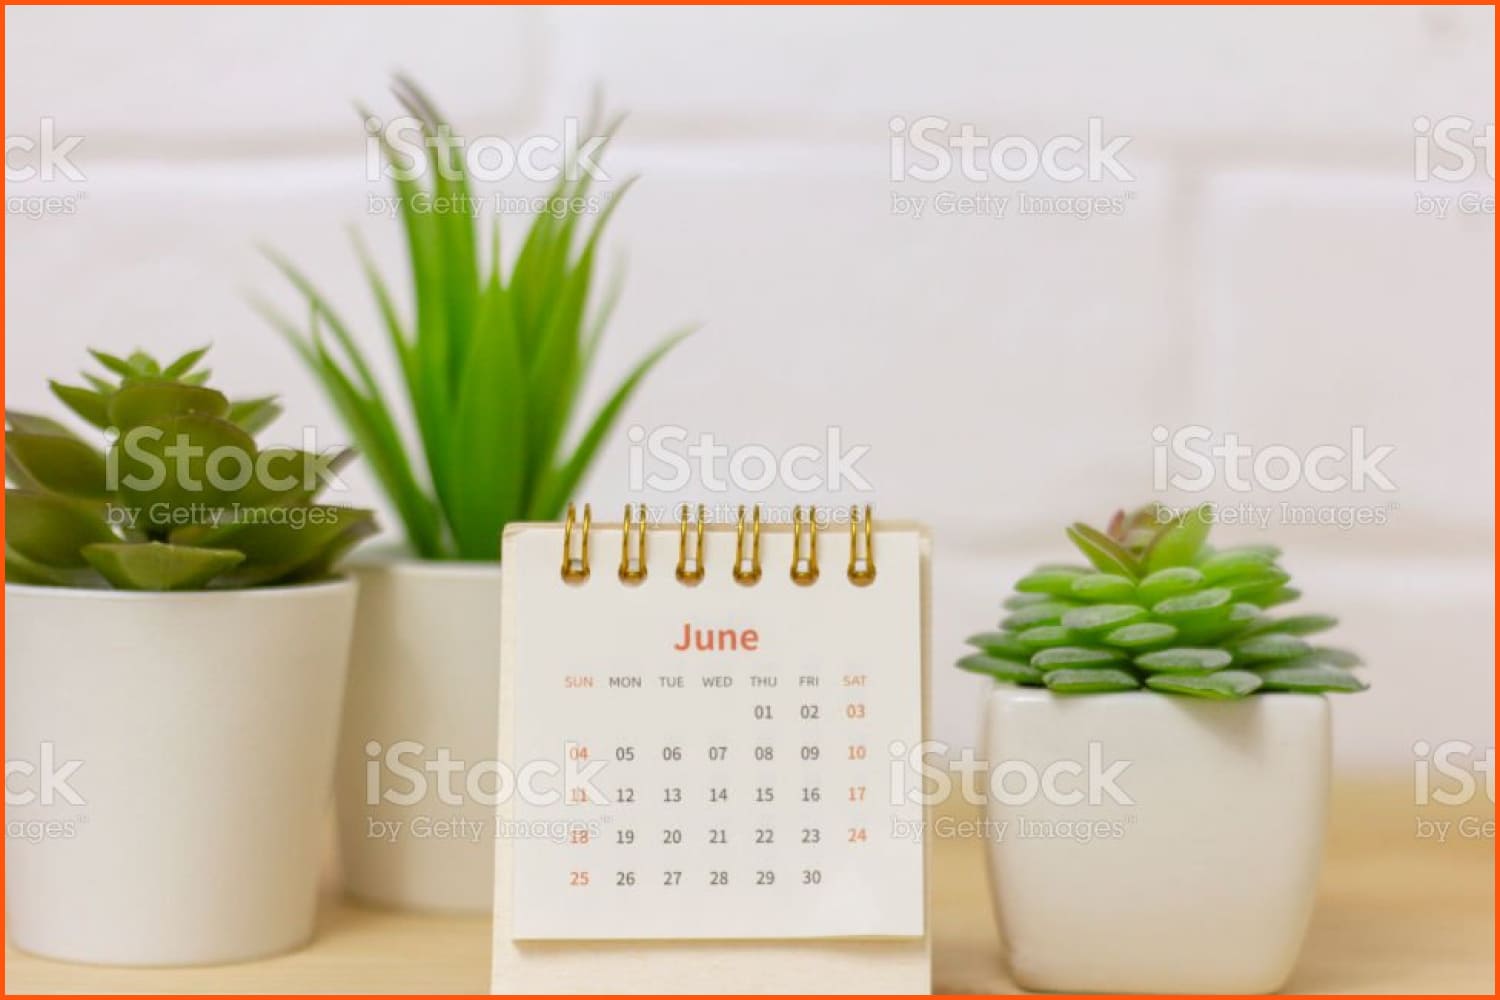 Desk calendar for June against the background of flowers in white pots.